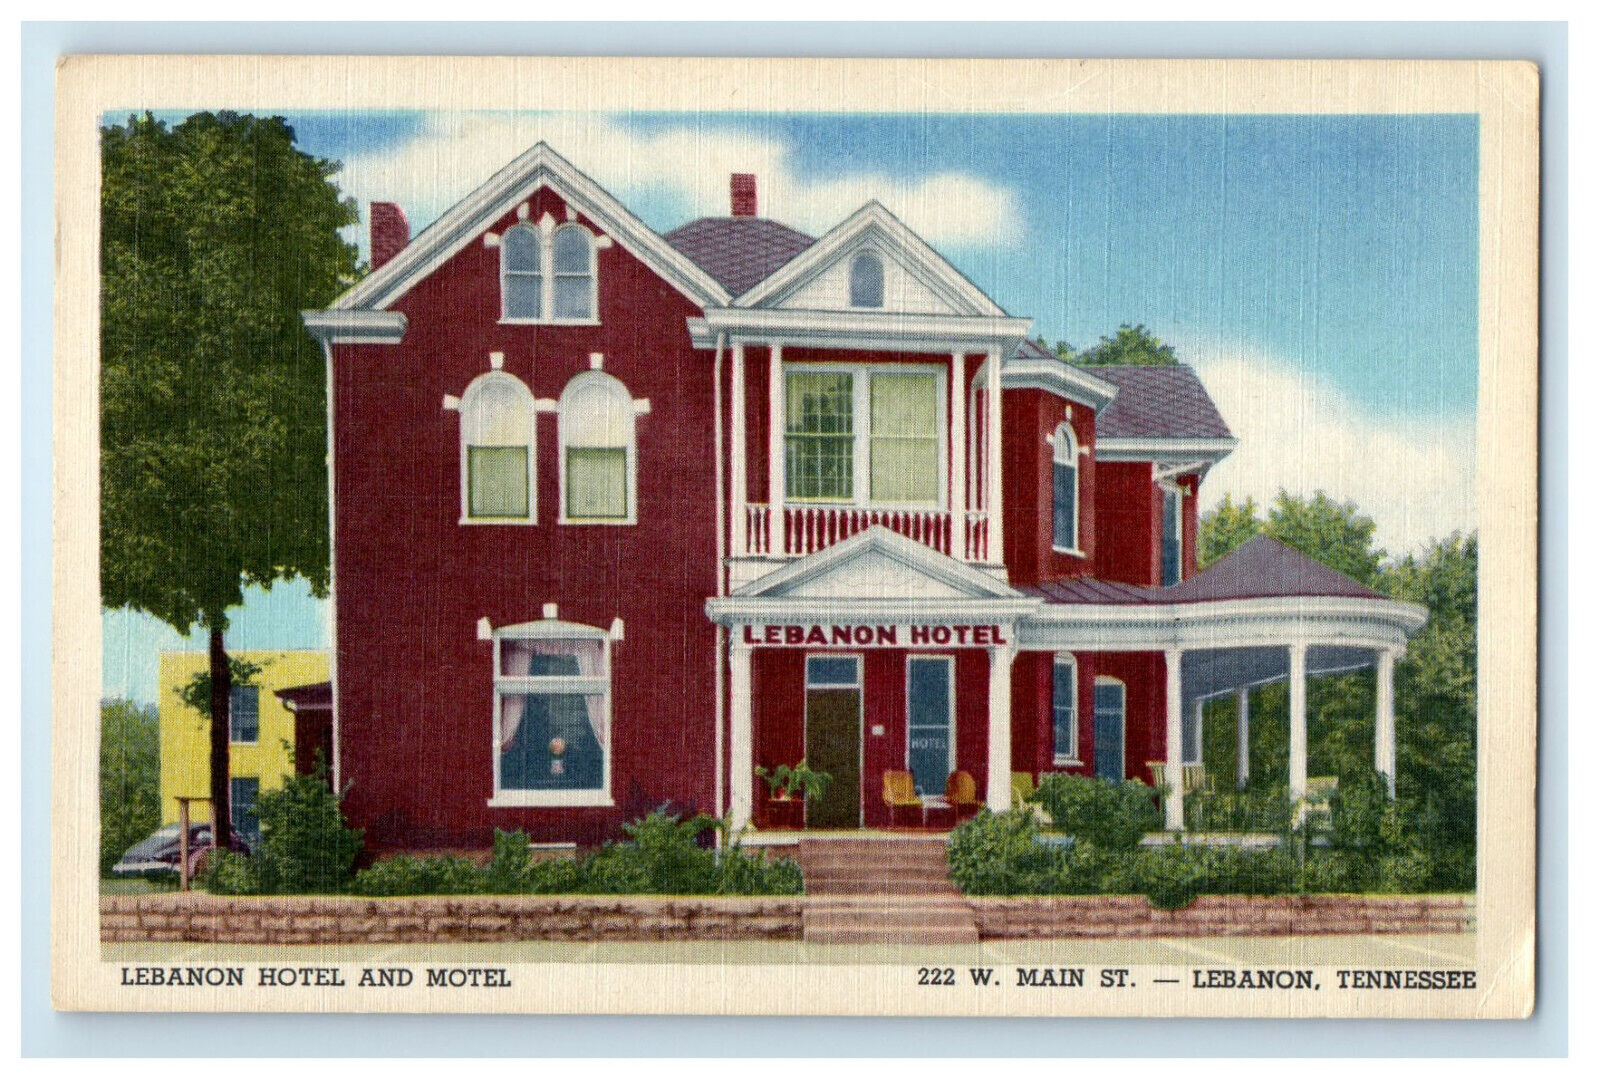 c1950s Lebanon Hotel and Motel, Lebanon Tennessee TN Vintage Unposted Postcard